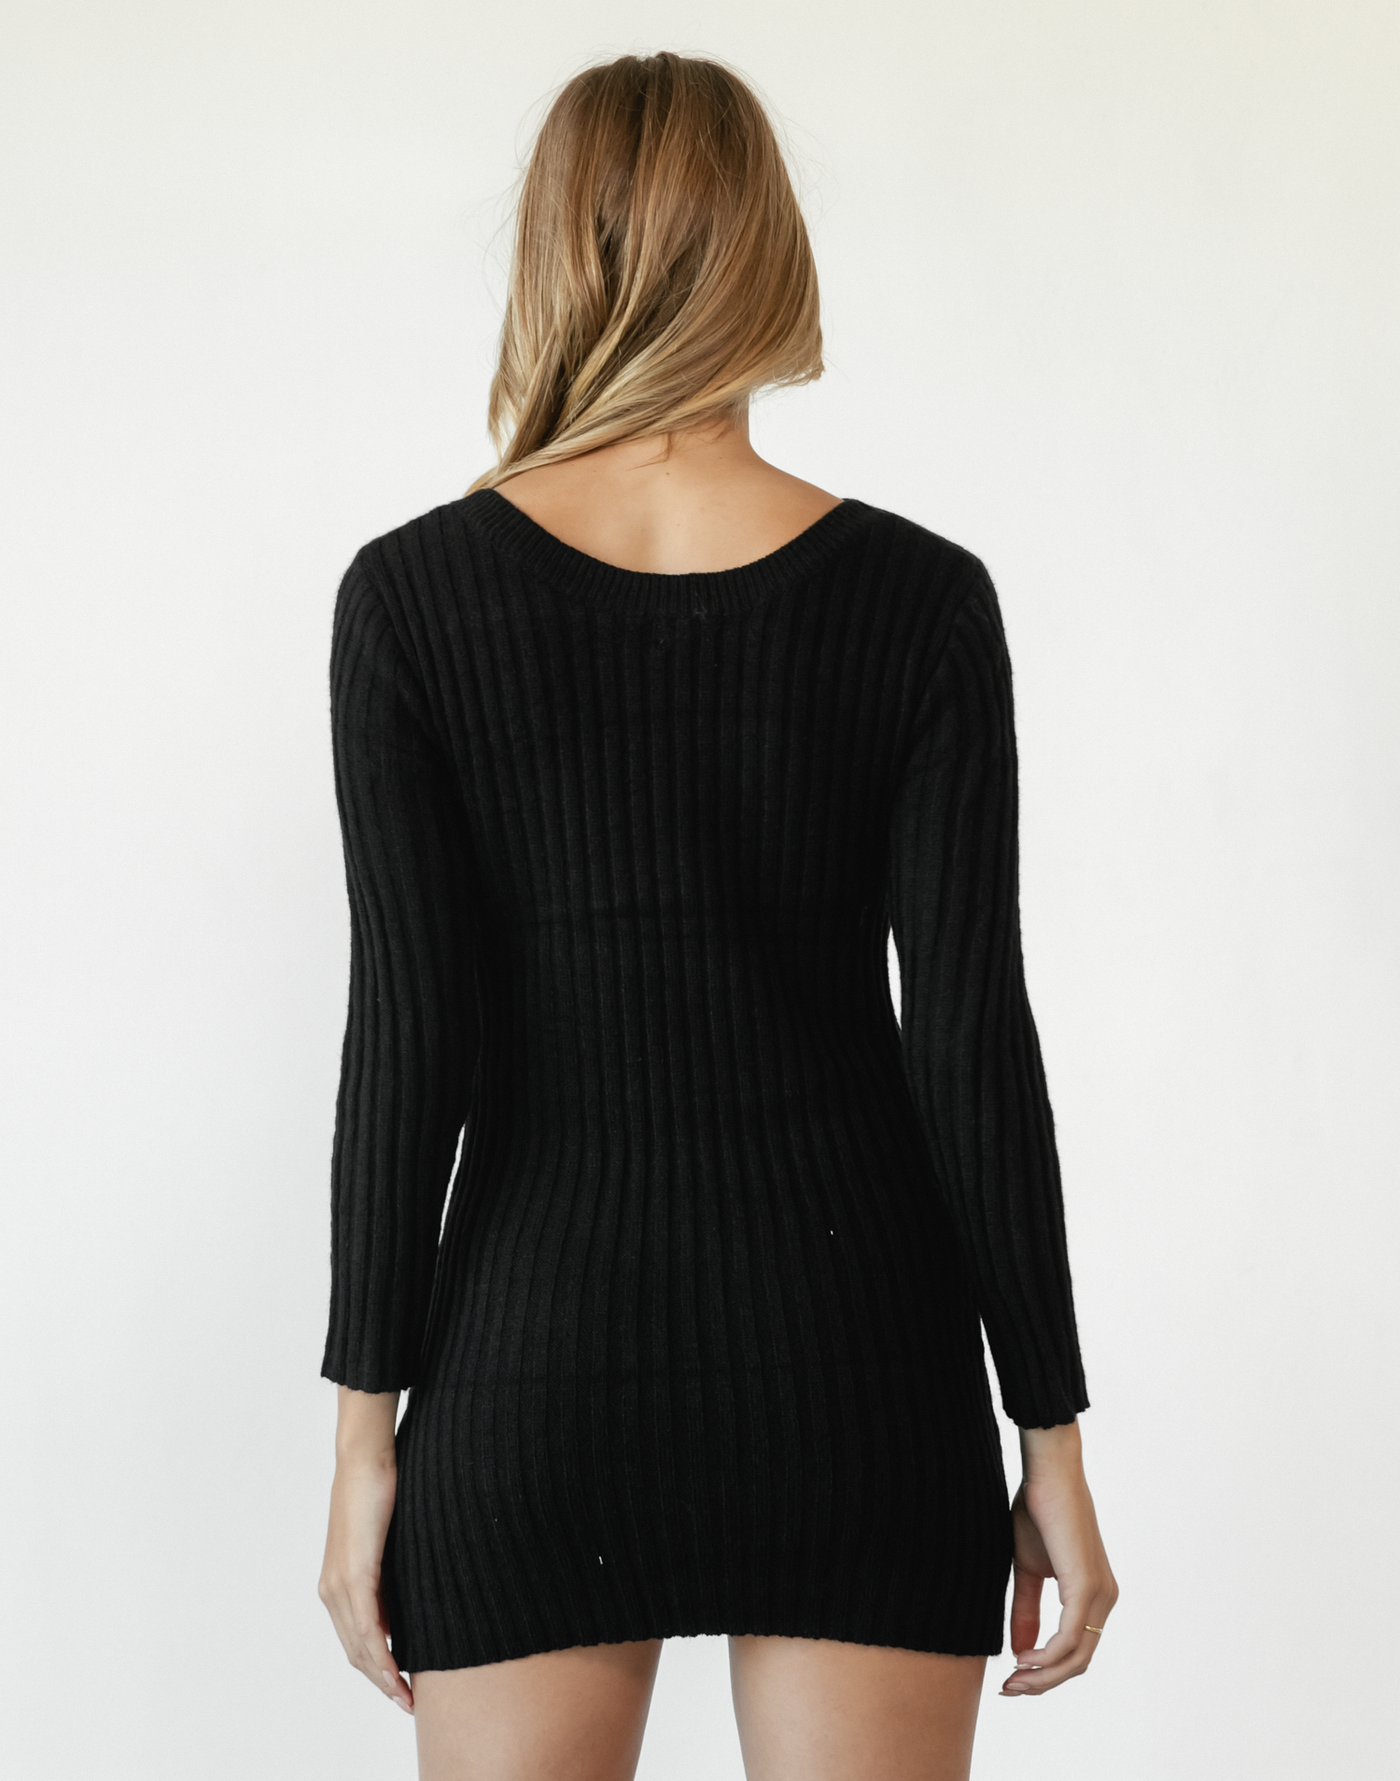 Brinnley Long Sleeve Mini Dress (Black) - Knit Long Sleeve Mini Dress - Women's Dress - Charcoal Clothing